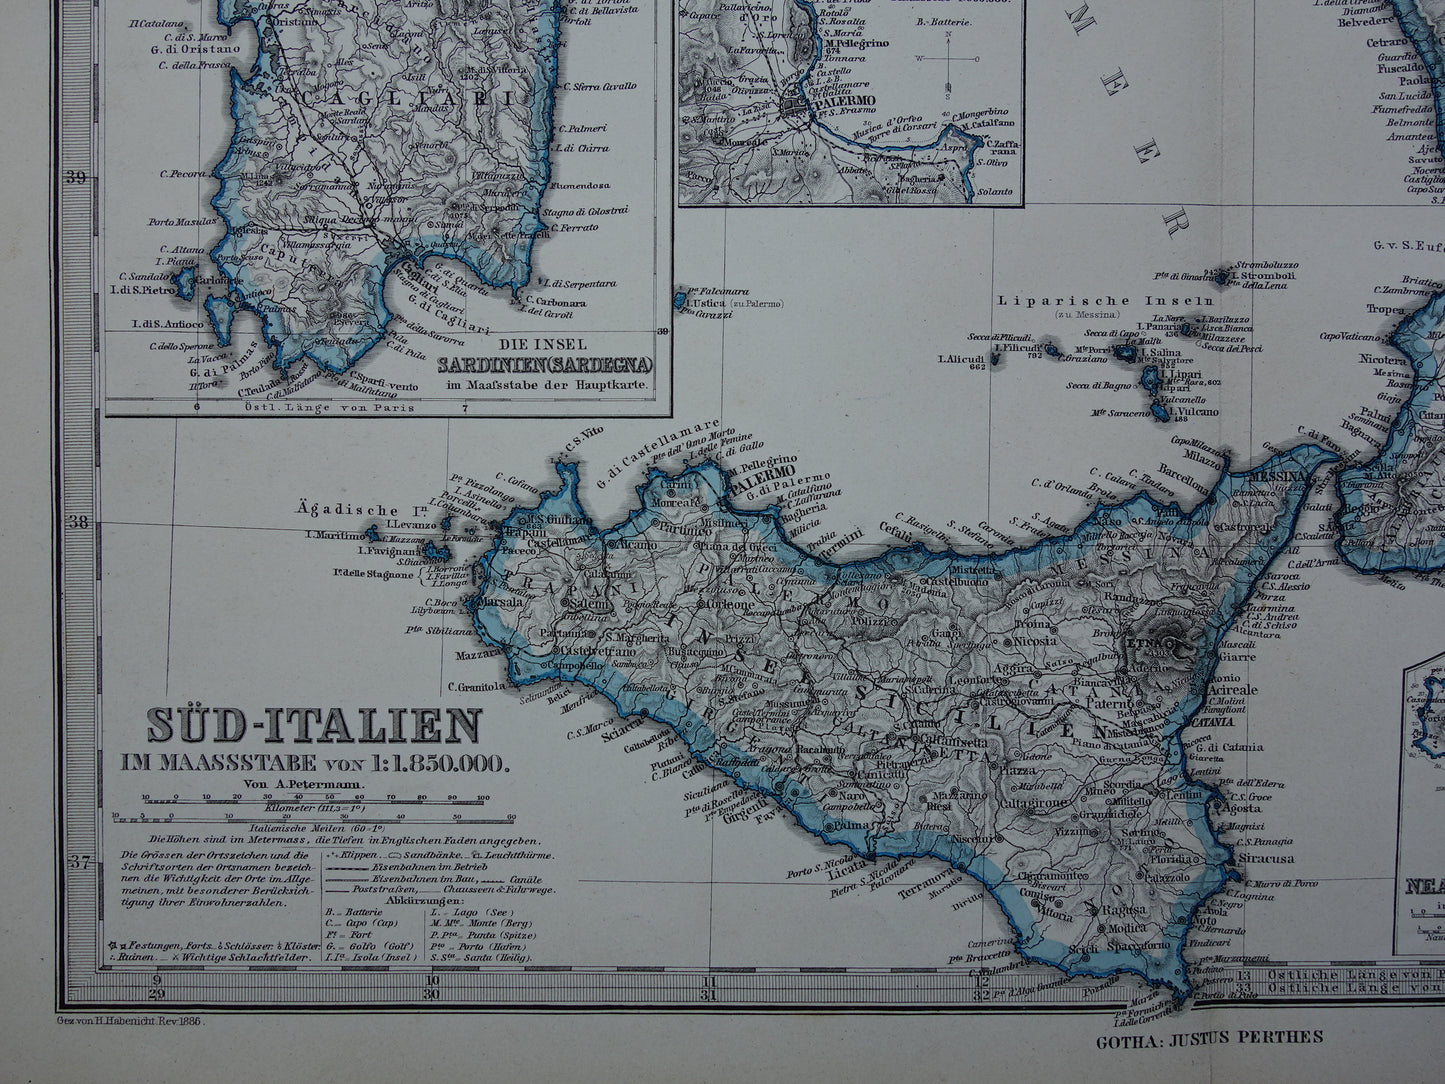 135+ jaar oude kaart van Italië - Handgekleurde origineel antieke landkaart met jaartal